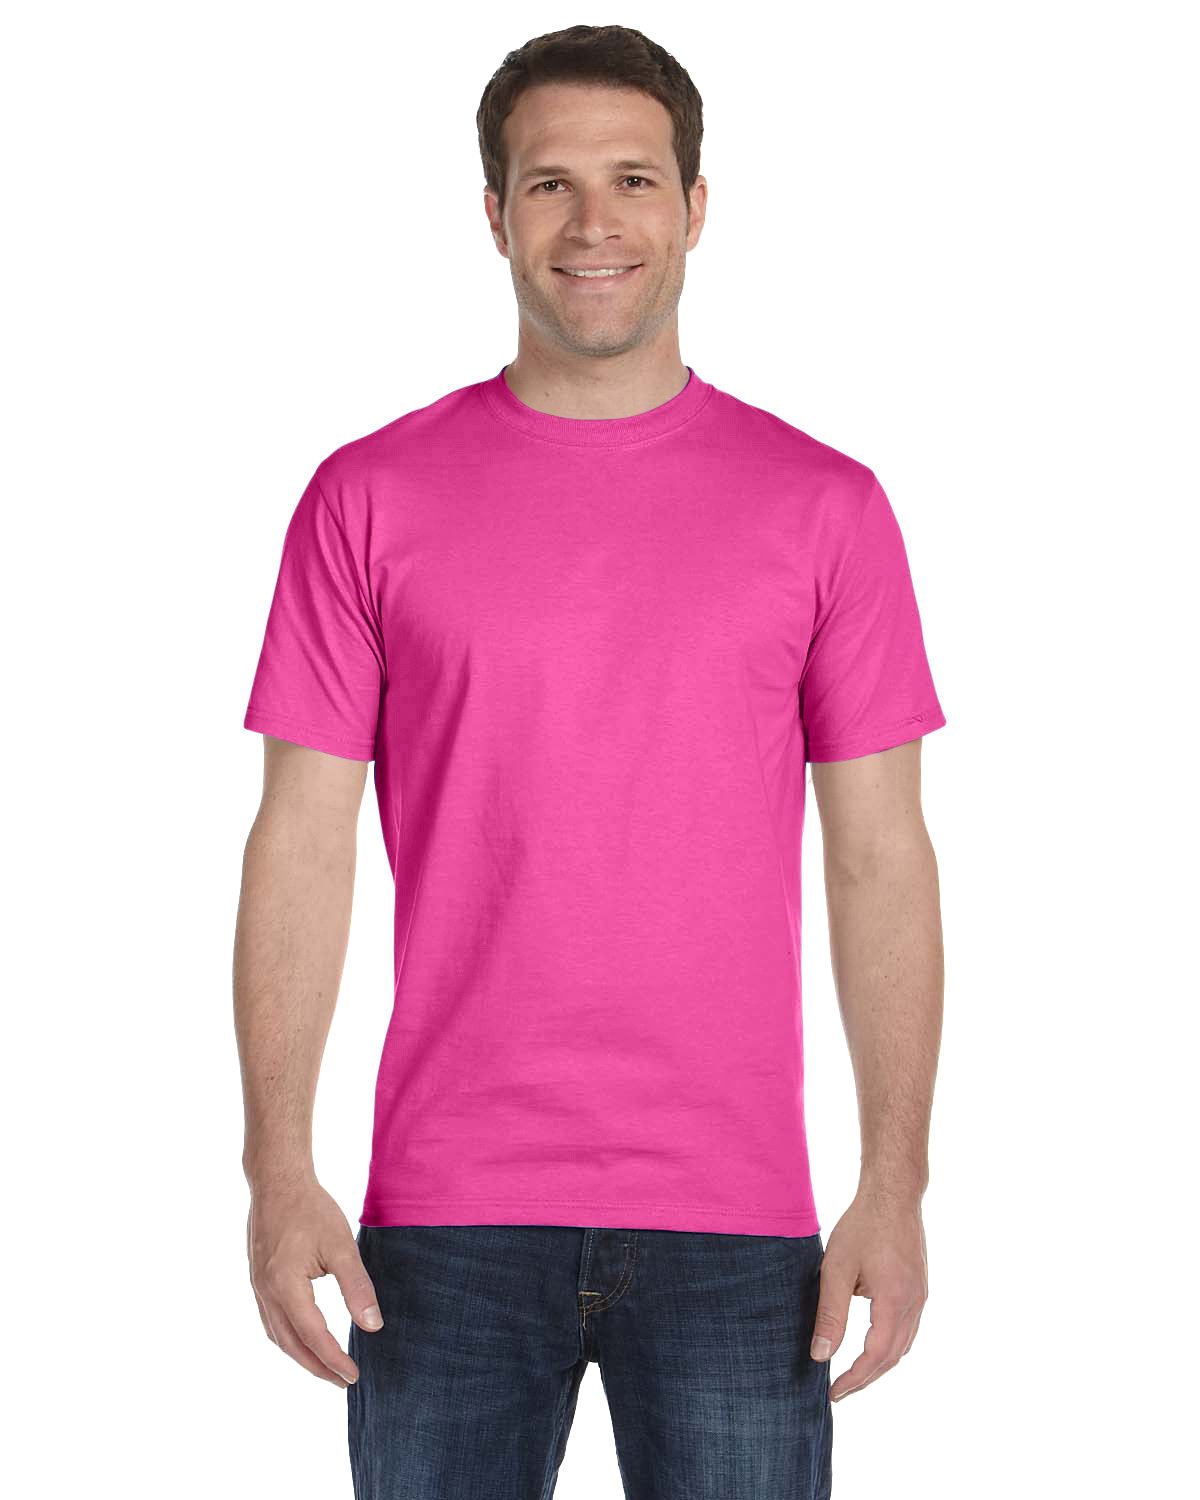 Hanes 5280, ComfortSoft ® 100% Cotton T-Shirt